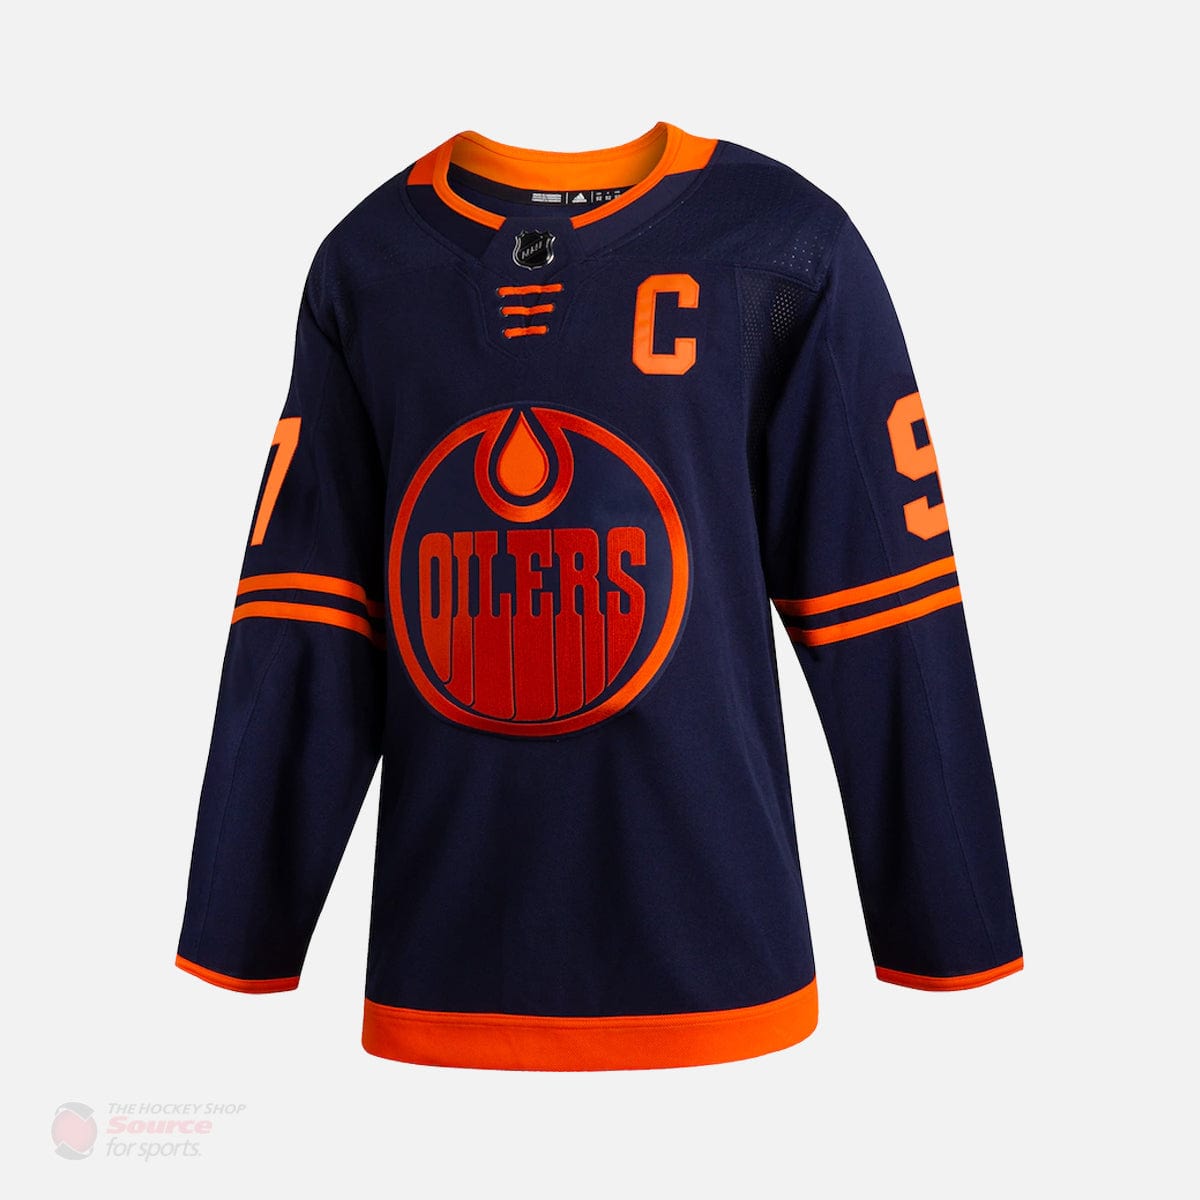 Edmonton Oilers Alternate Adidas Authentic Senior Jersey - Connor McDavid